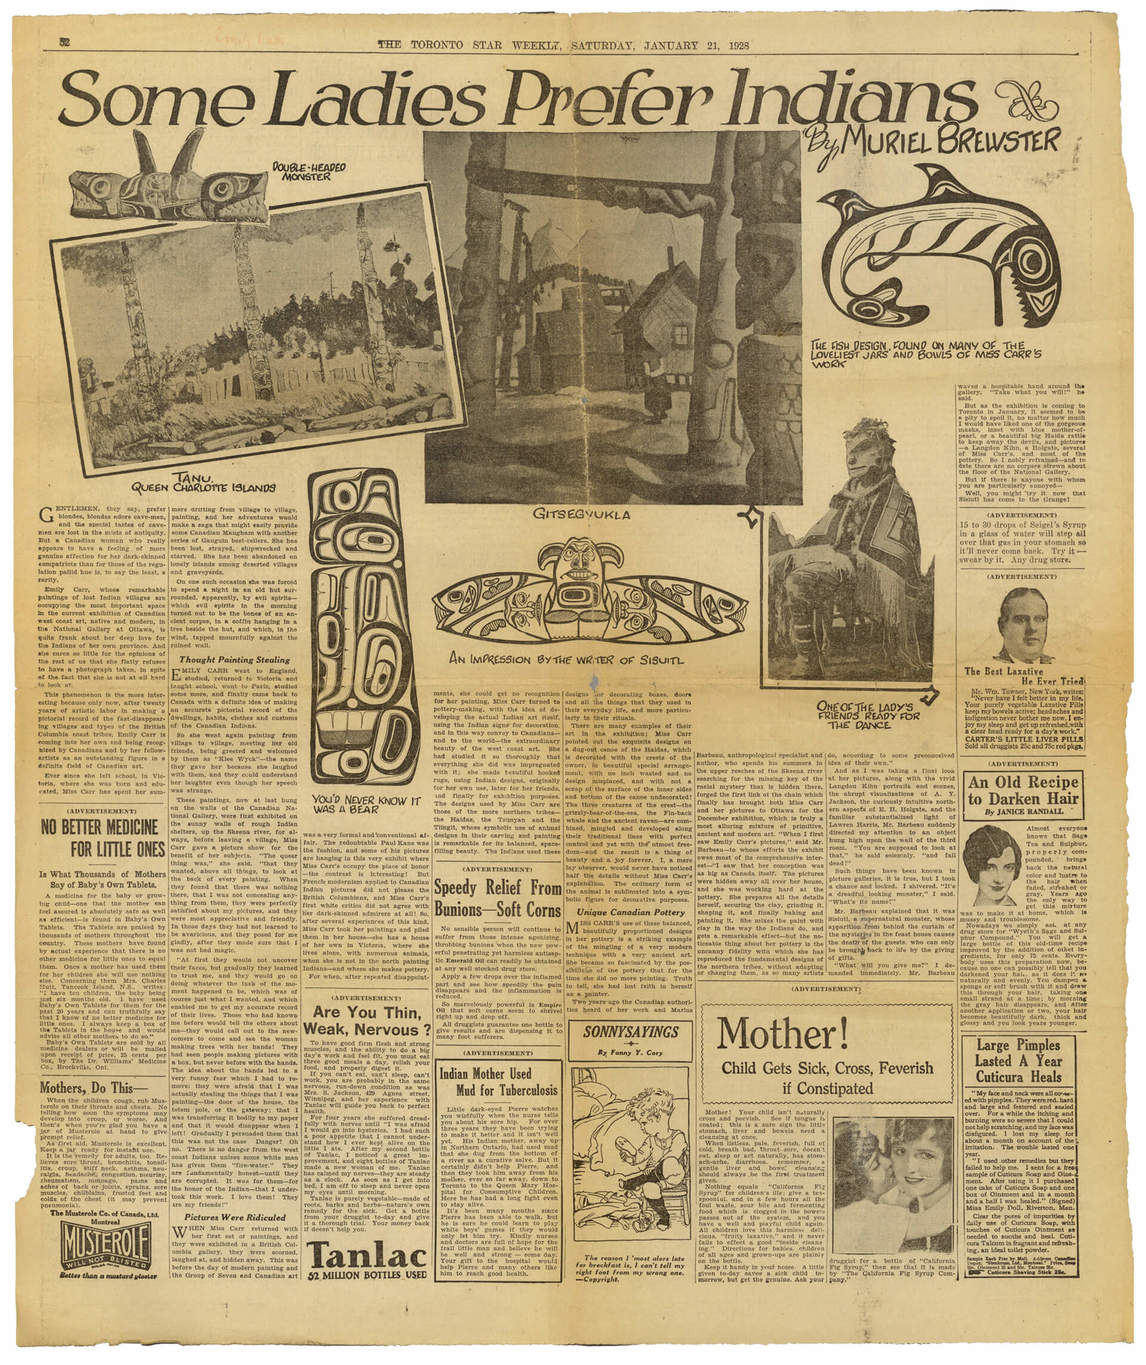 Art Canada Institute, Muriel Brewster (Muriel Bruce), Toronto Star Weekly, January 21, 1928